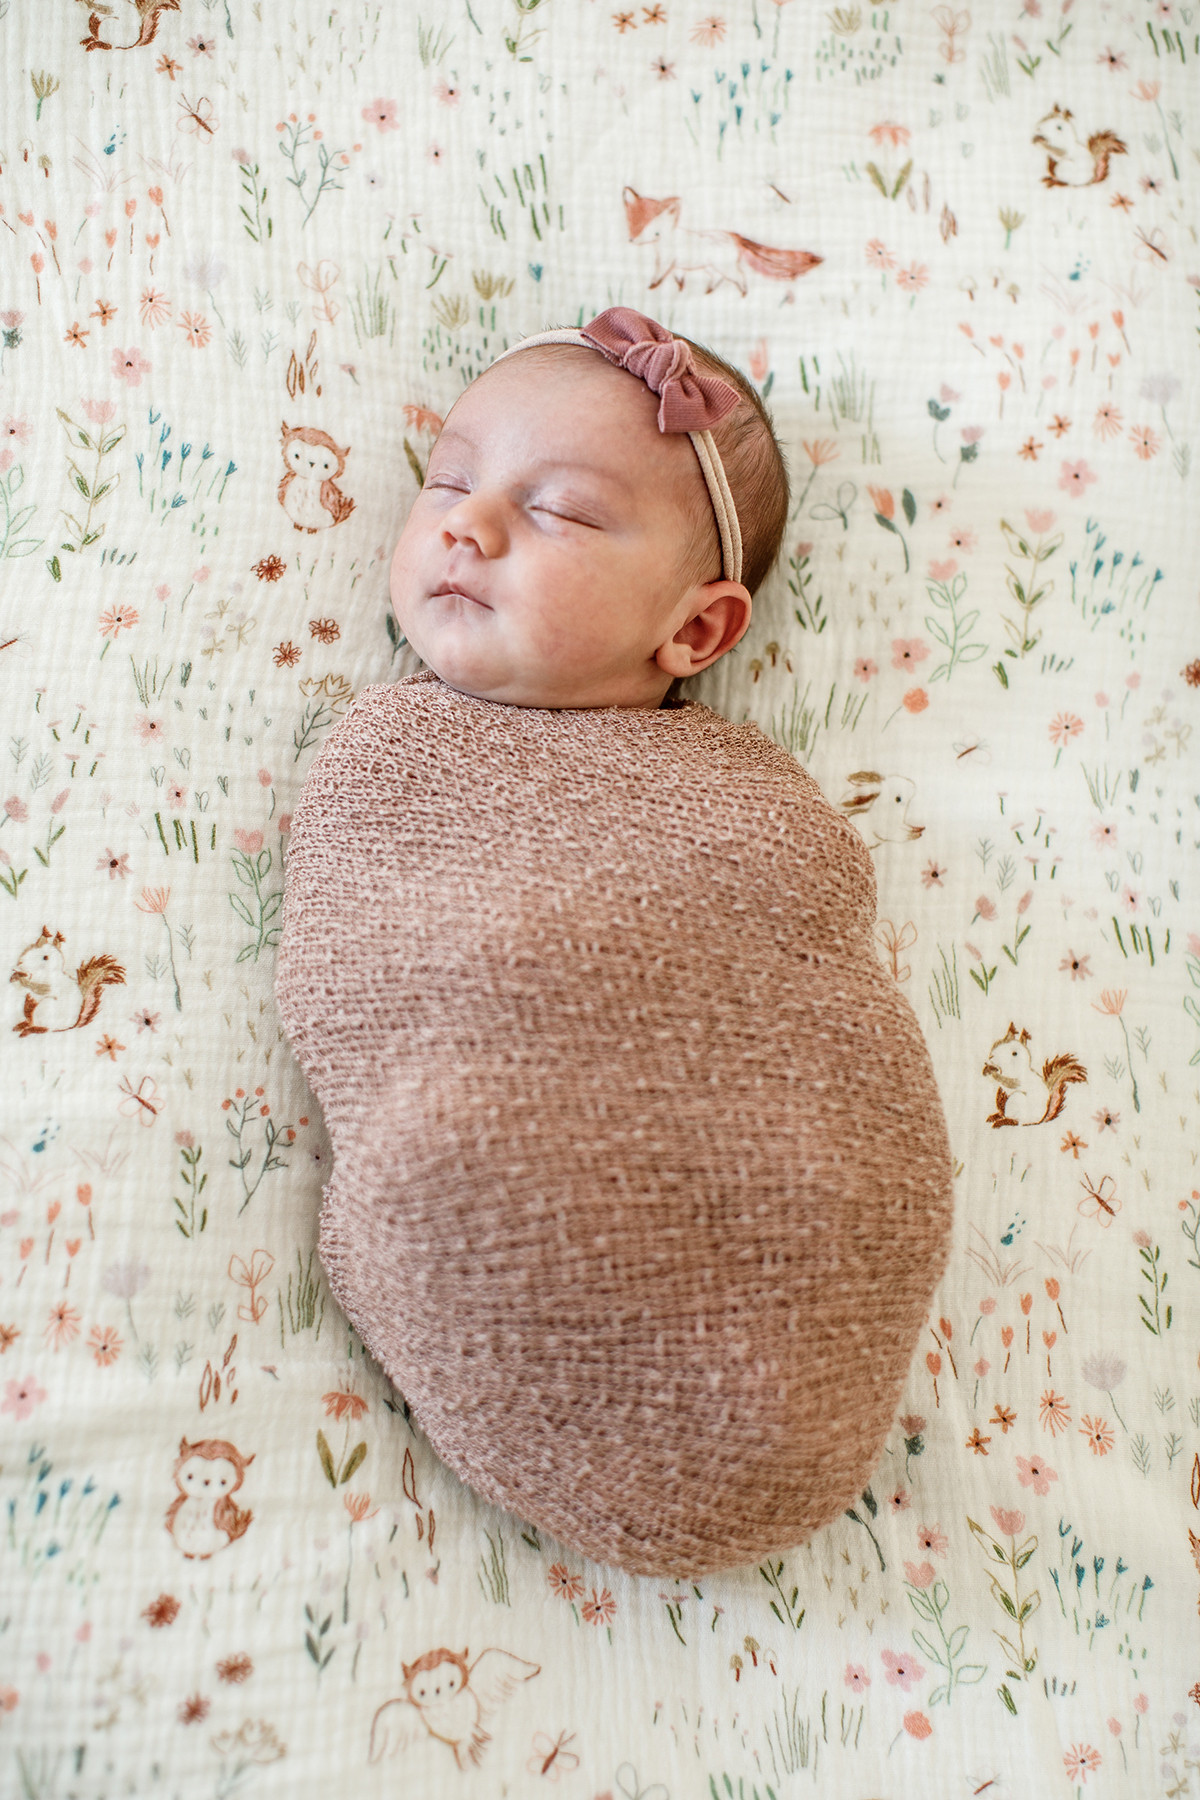 swaddled newborn baby girl with headband